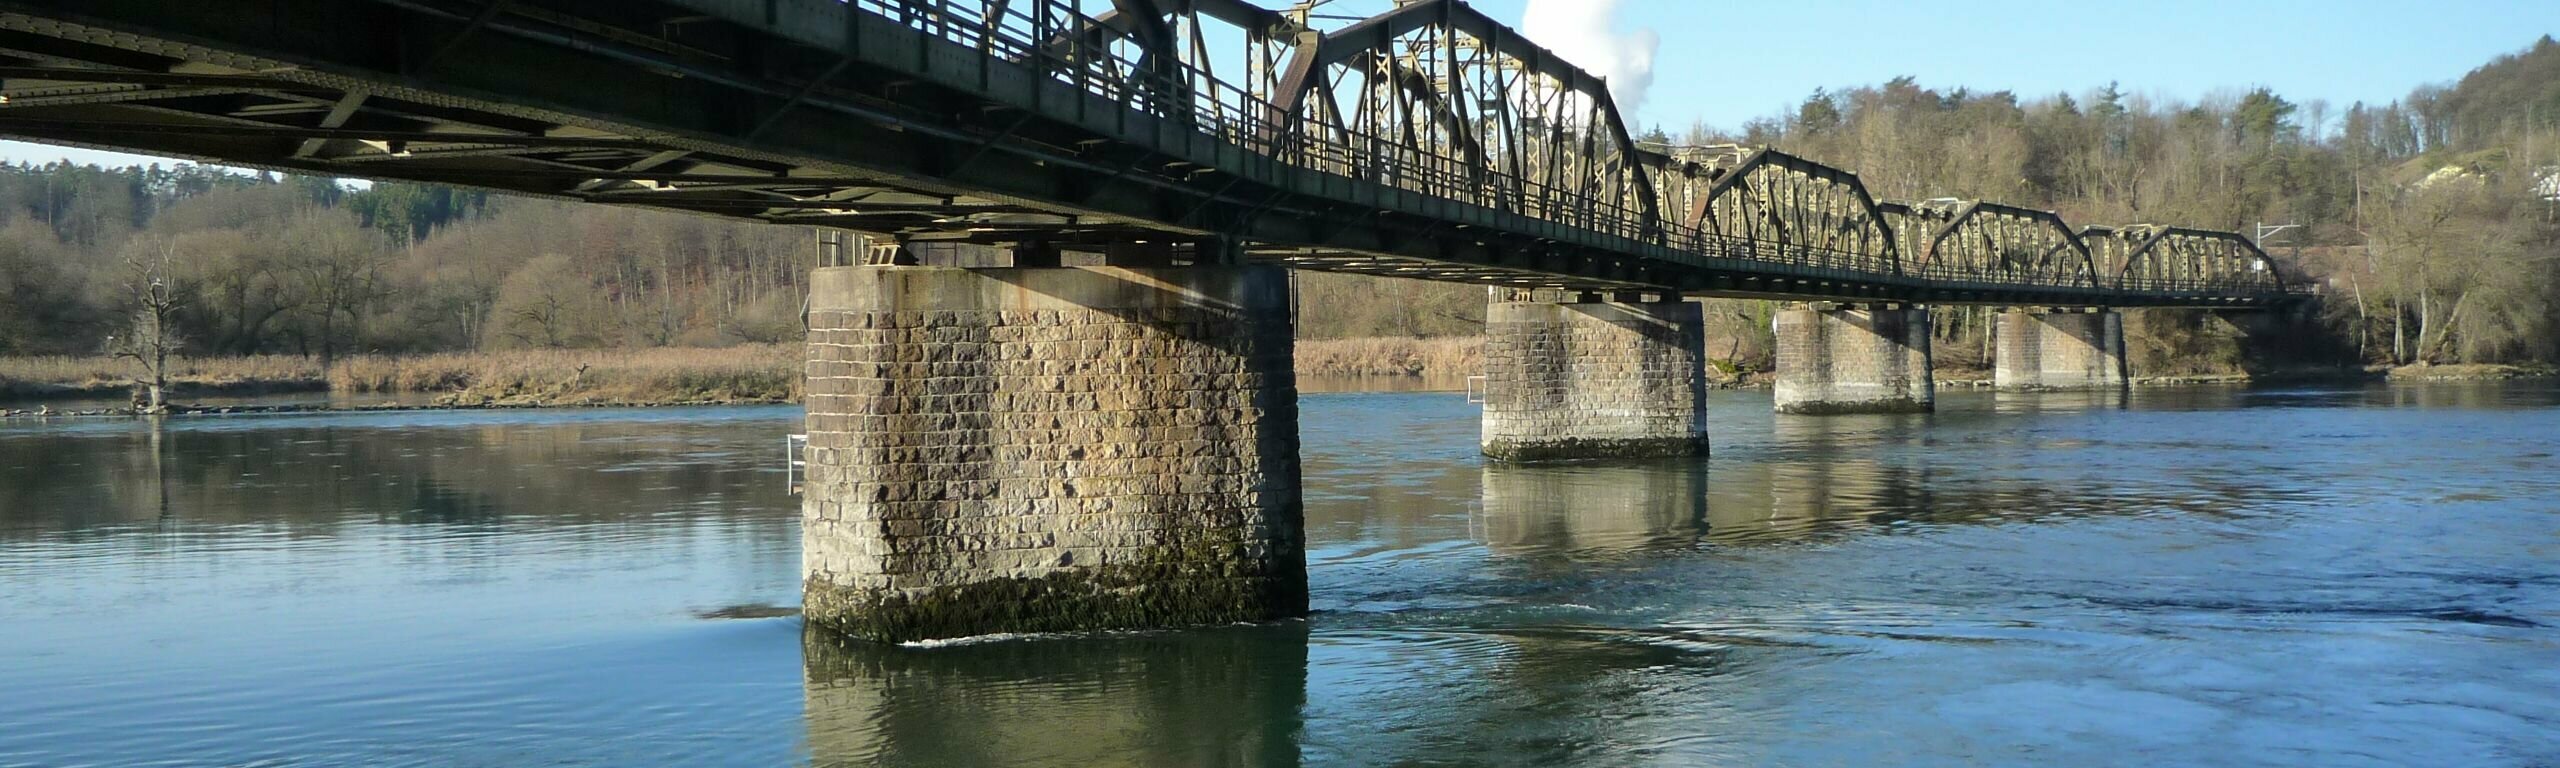 Aarebrücke in Koblenz